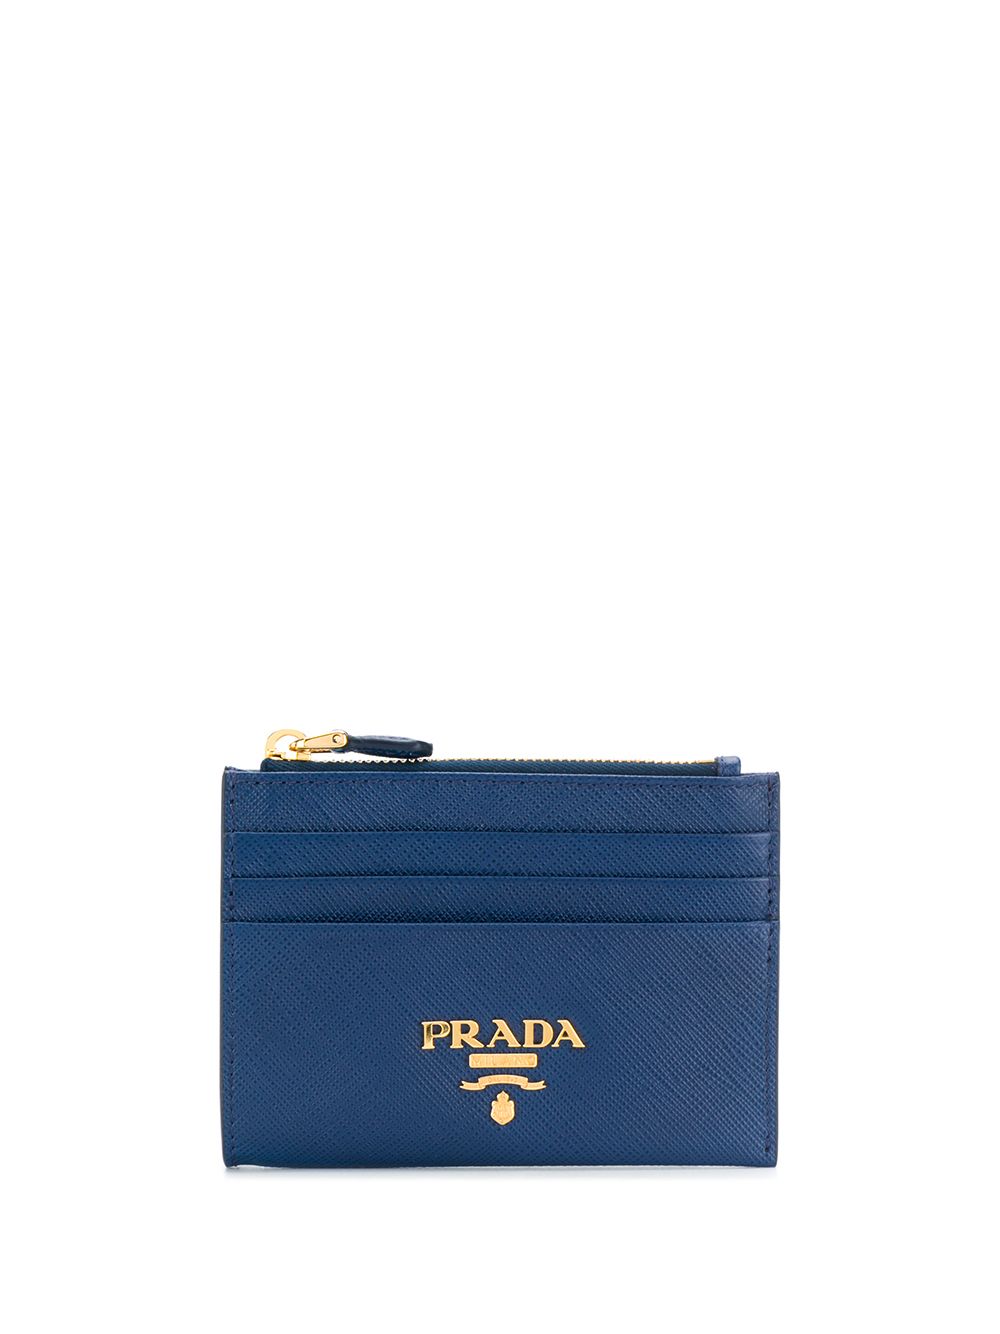 фото Prada кошелек с металлическим логотипом